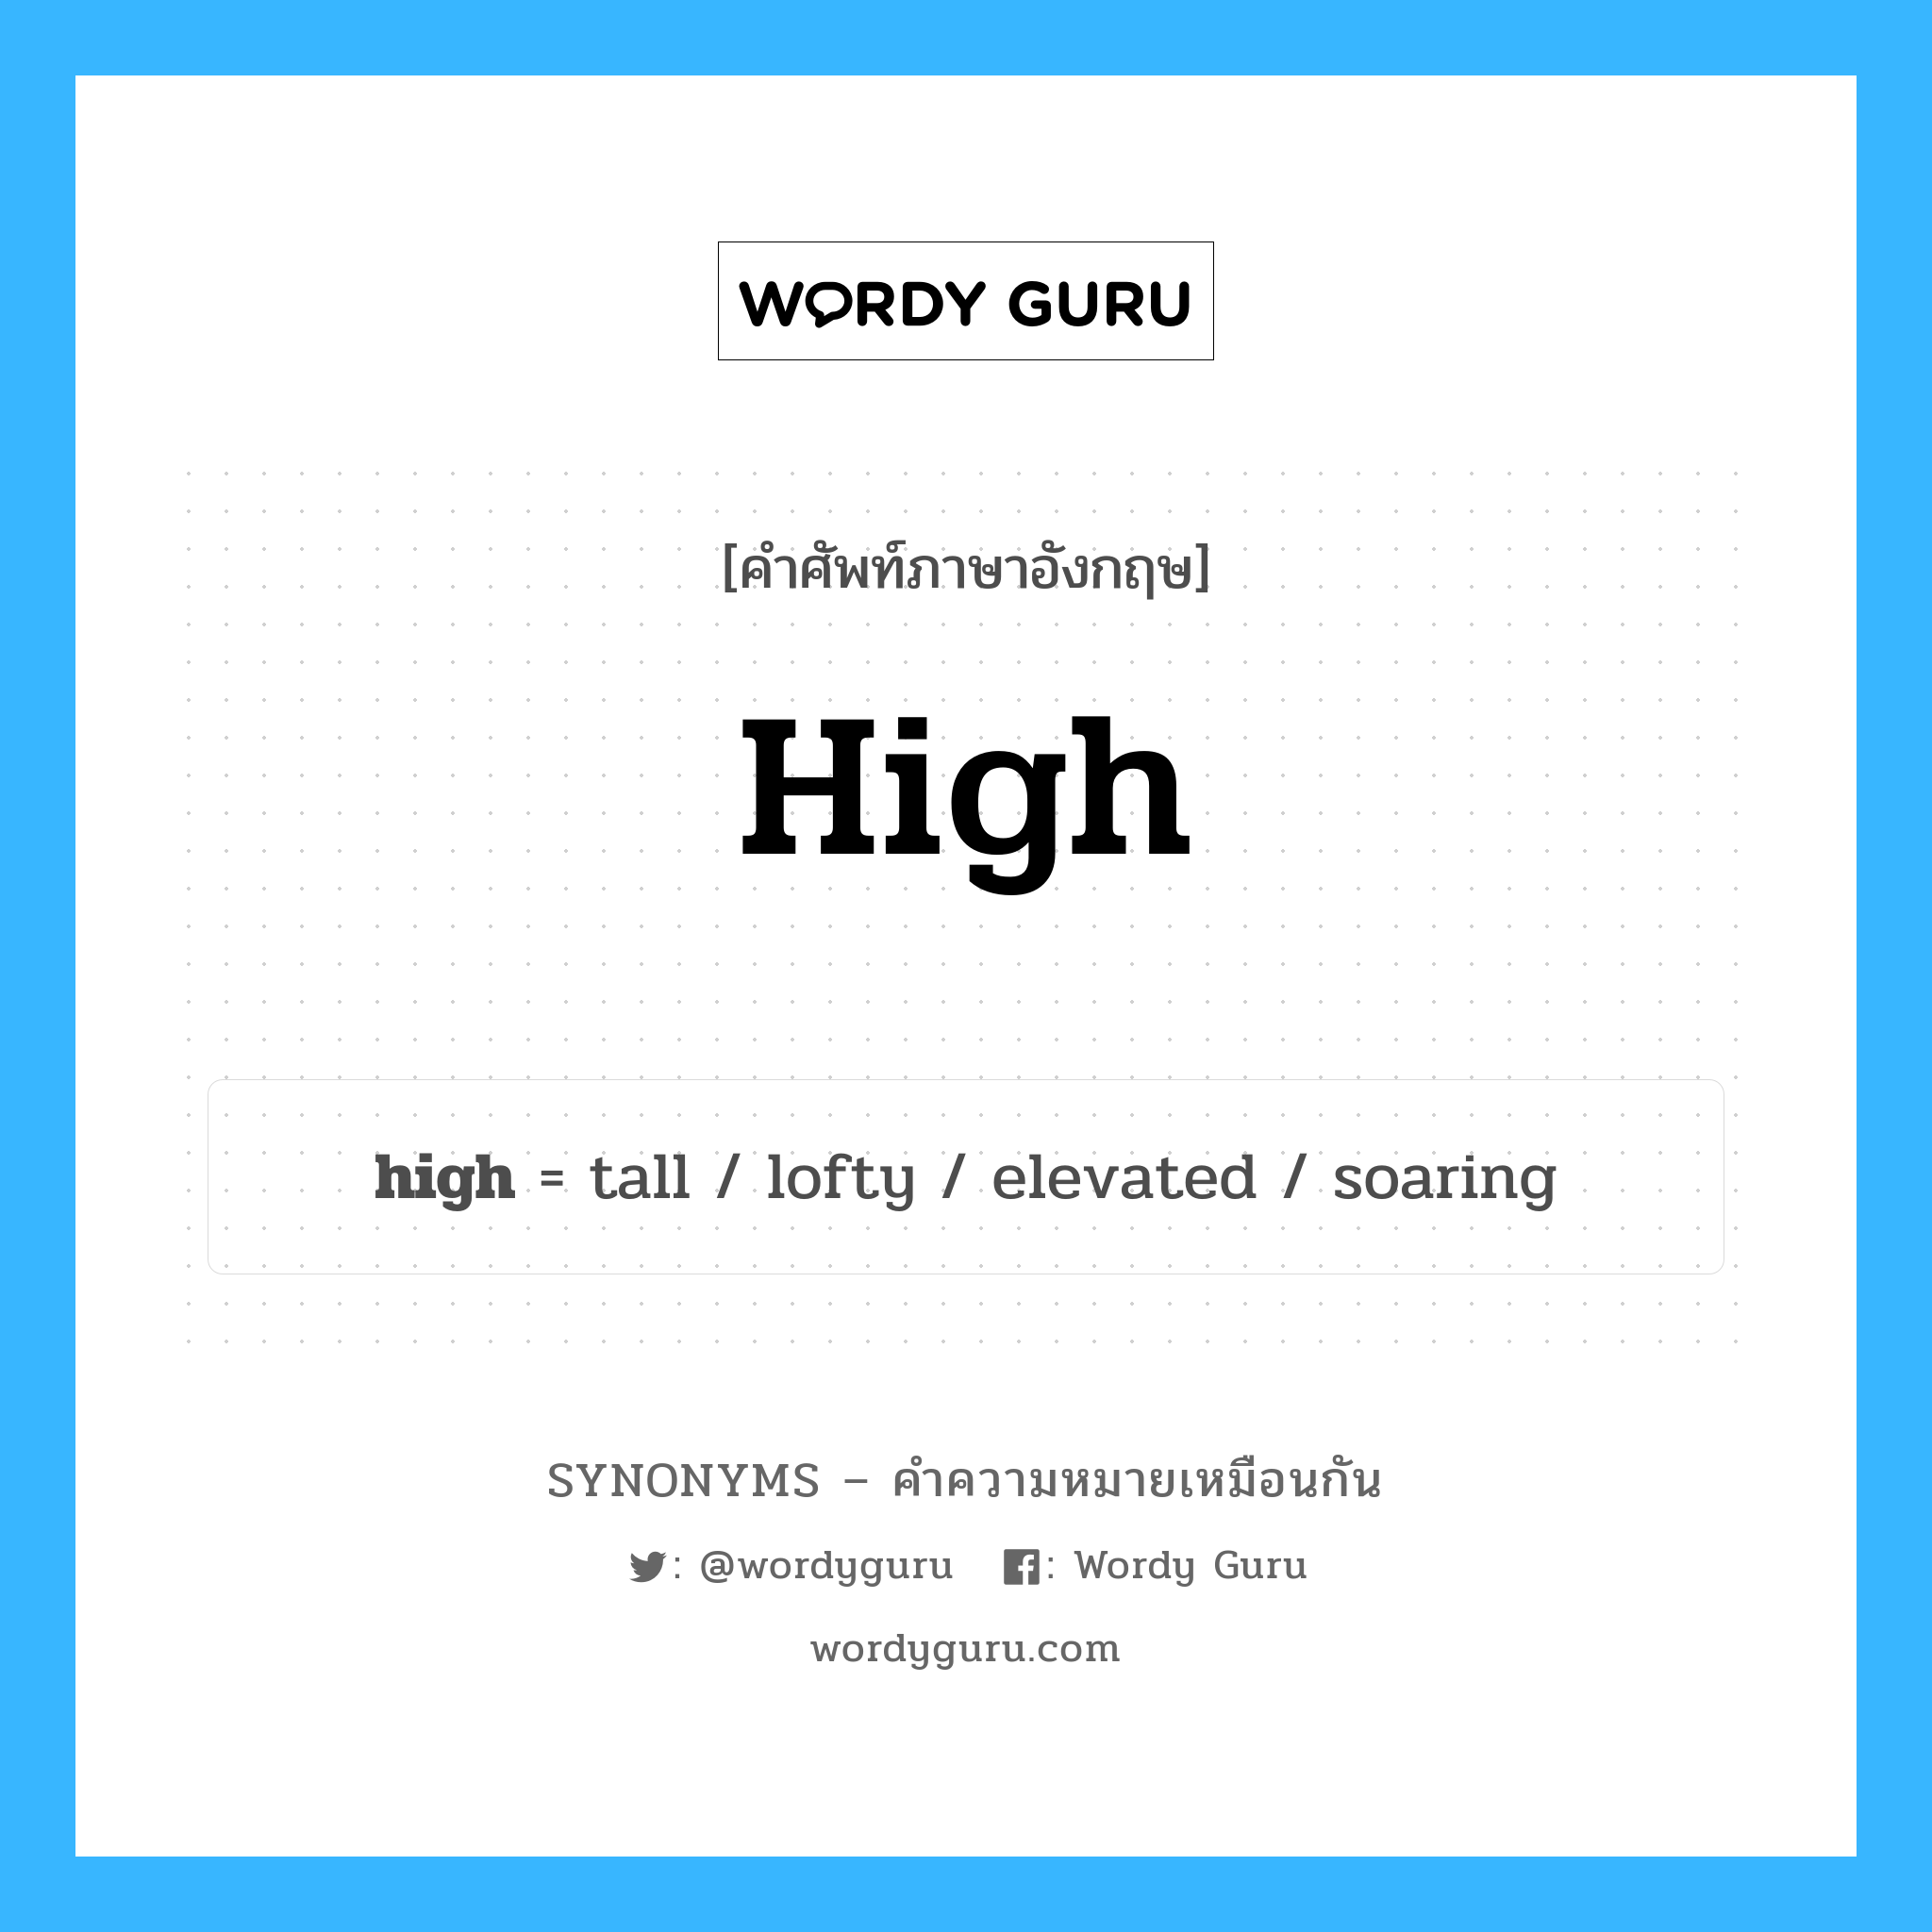 lofty เป็นหนึ่งใน high และมีคำอื่น ๆ อีกดังนี้, คำศัพท์ภาษาอังกฤษ lofty ความหมายคล้ายกันกับ high แปลว่า สูงส่ง หมวด high